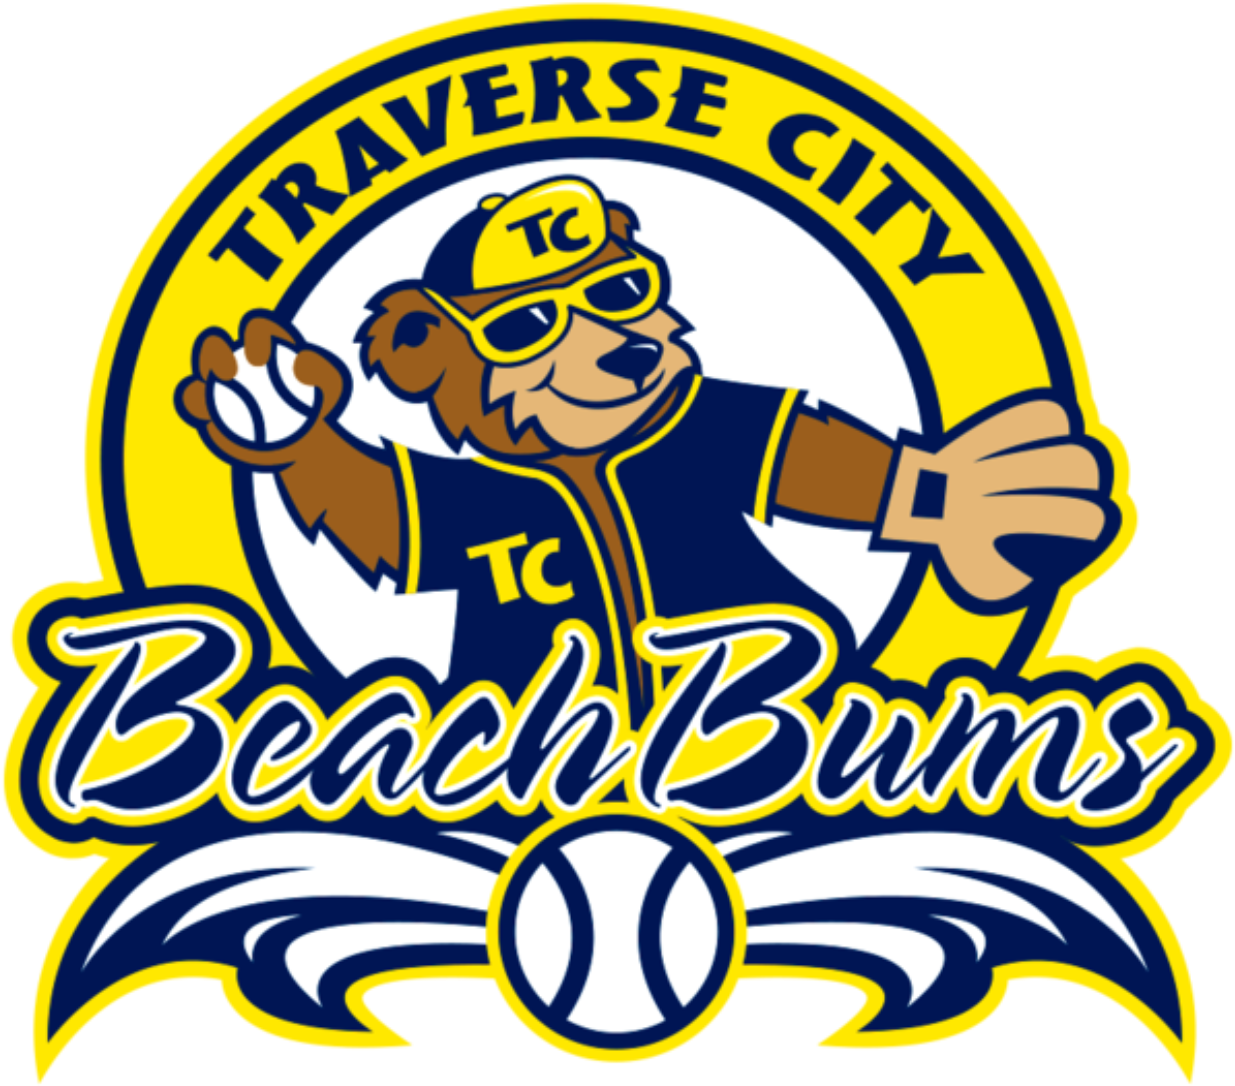 2016 Bfv Beach Bums Schedule - Traverse City Beach Bums (1240x1240)